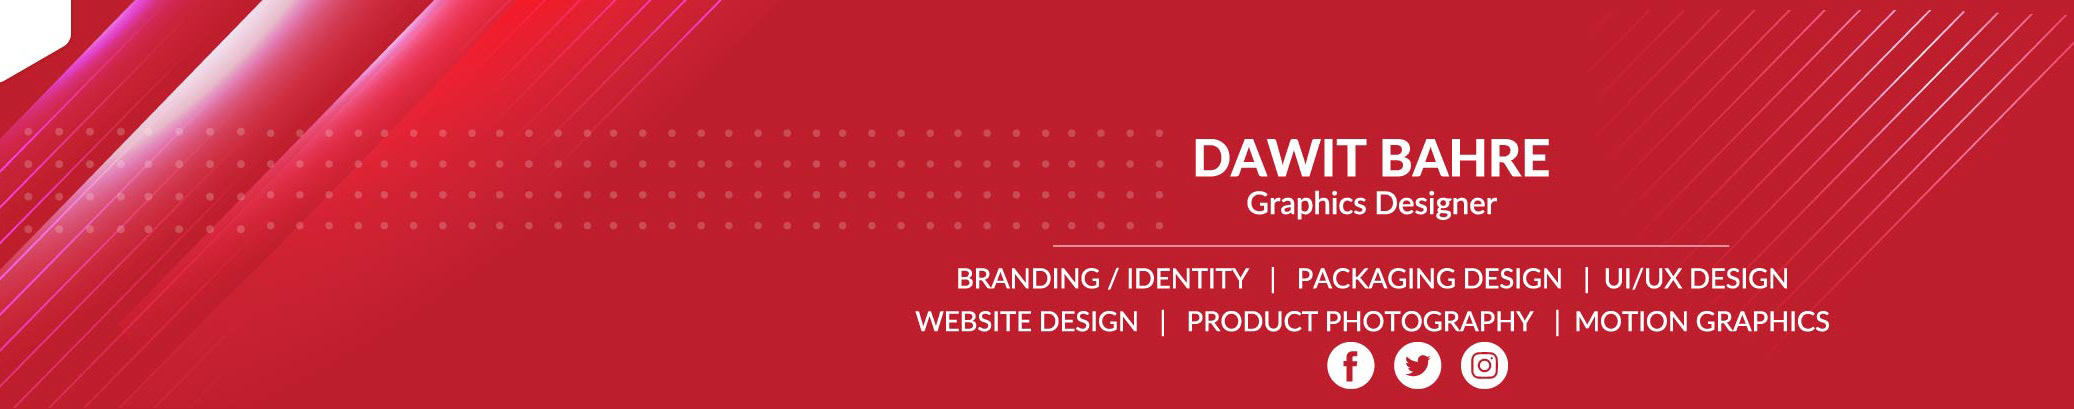 Dawit Bahre's profile banner